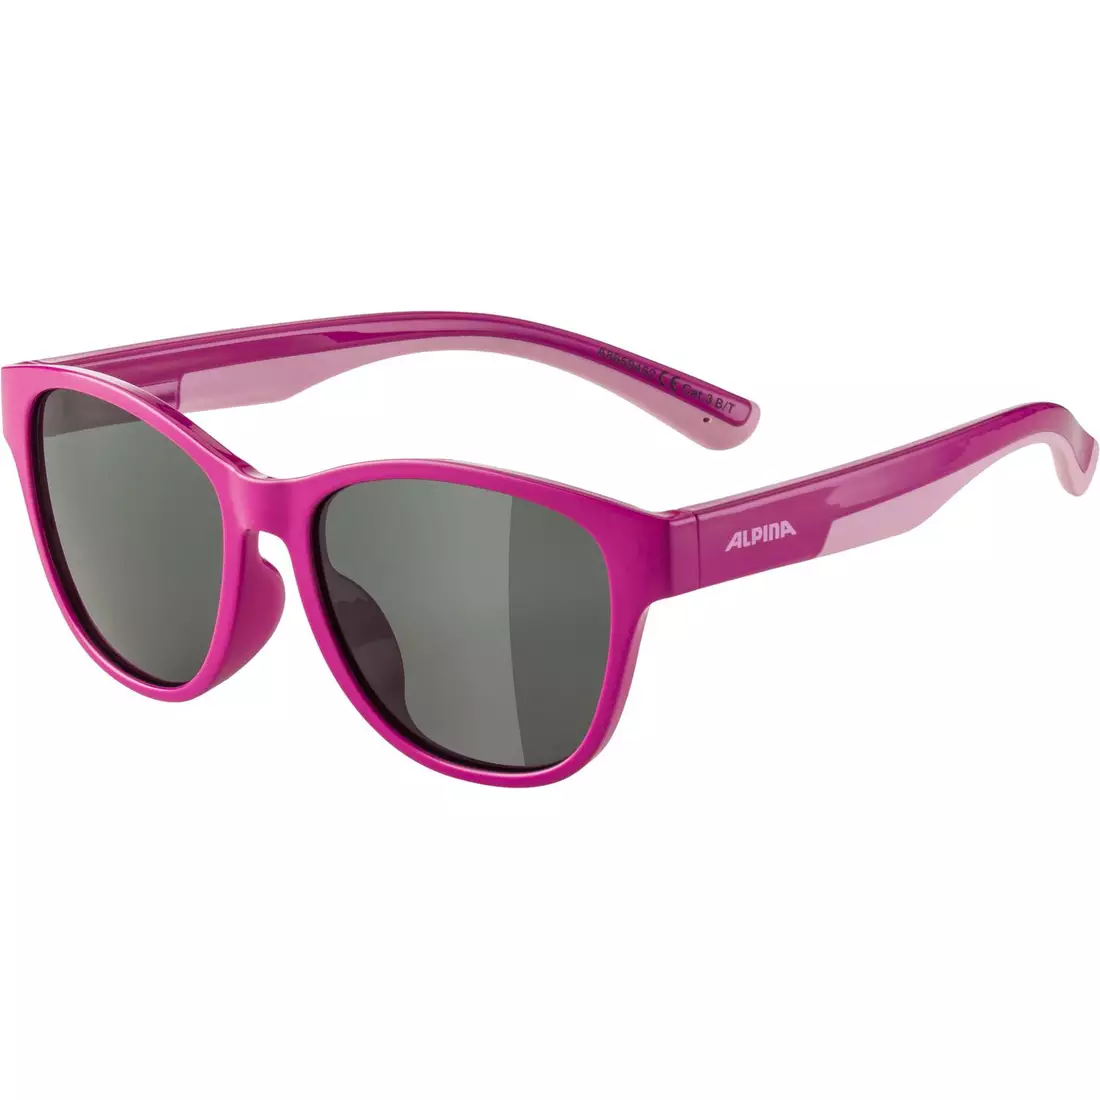 ALPINA FLEXXY COOL KIDS II children's cycling/sports glasses, pink-rose gloss